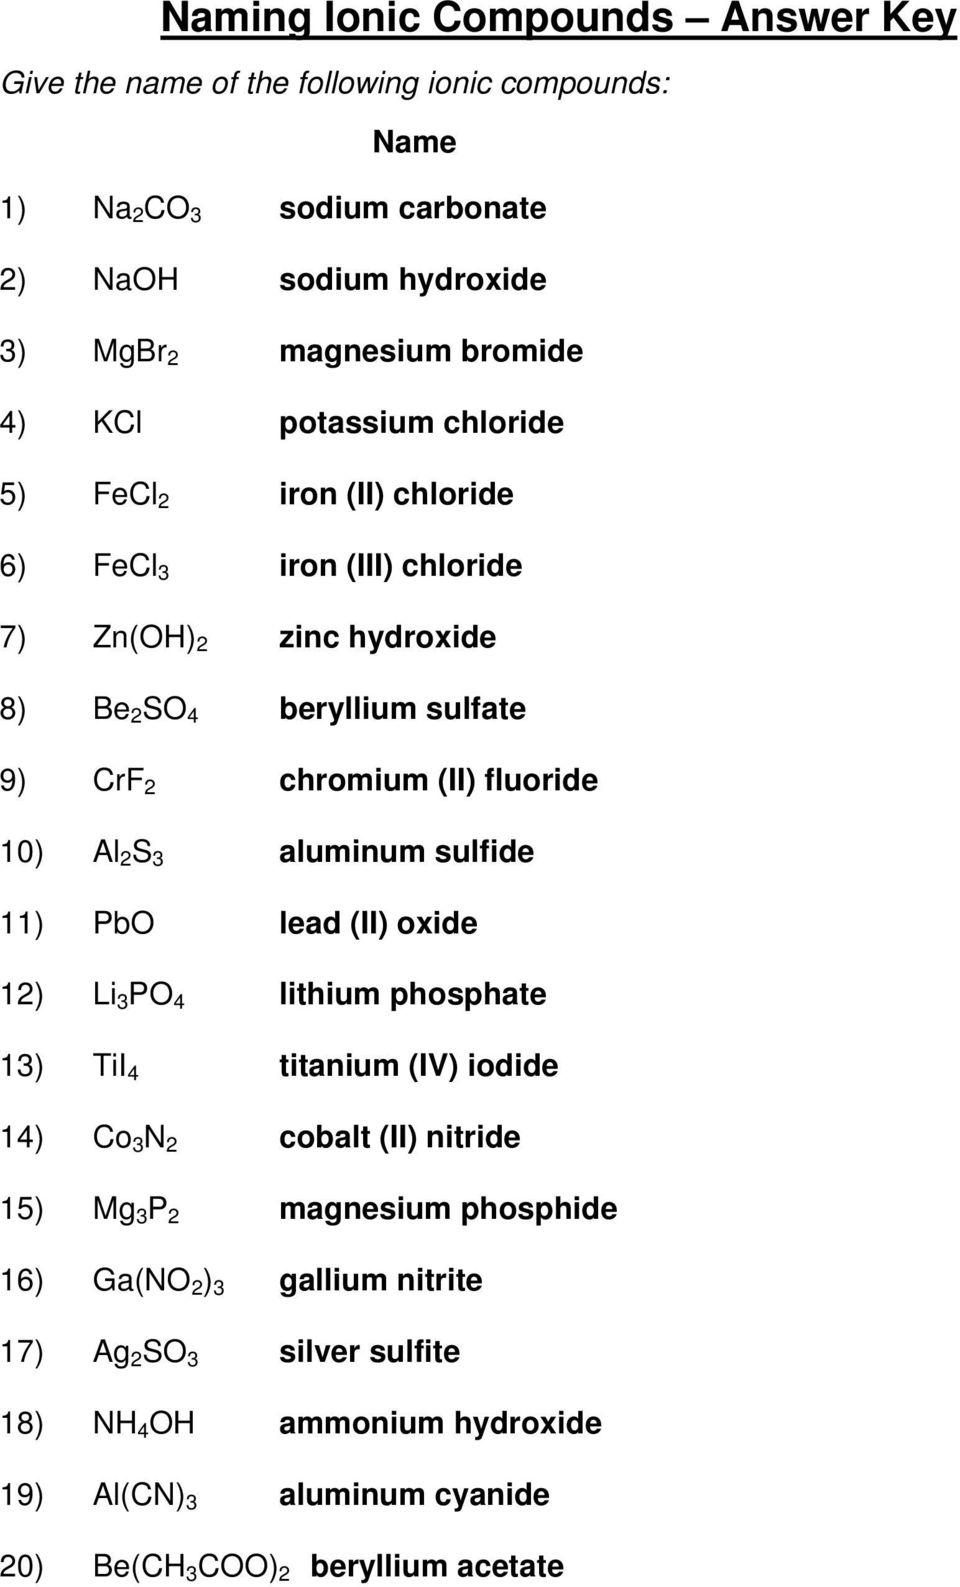 Naming Ionic Compounds Answer Key - PDF Free Download Pertaining To Naming Ionic Compounds Worksheet Answers